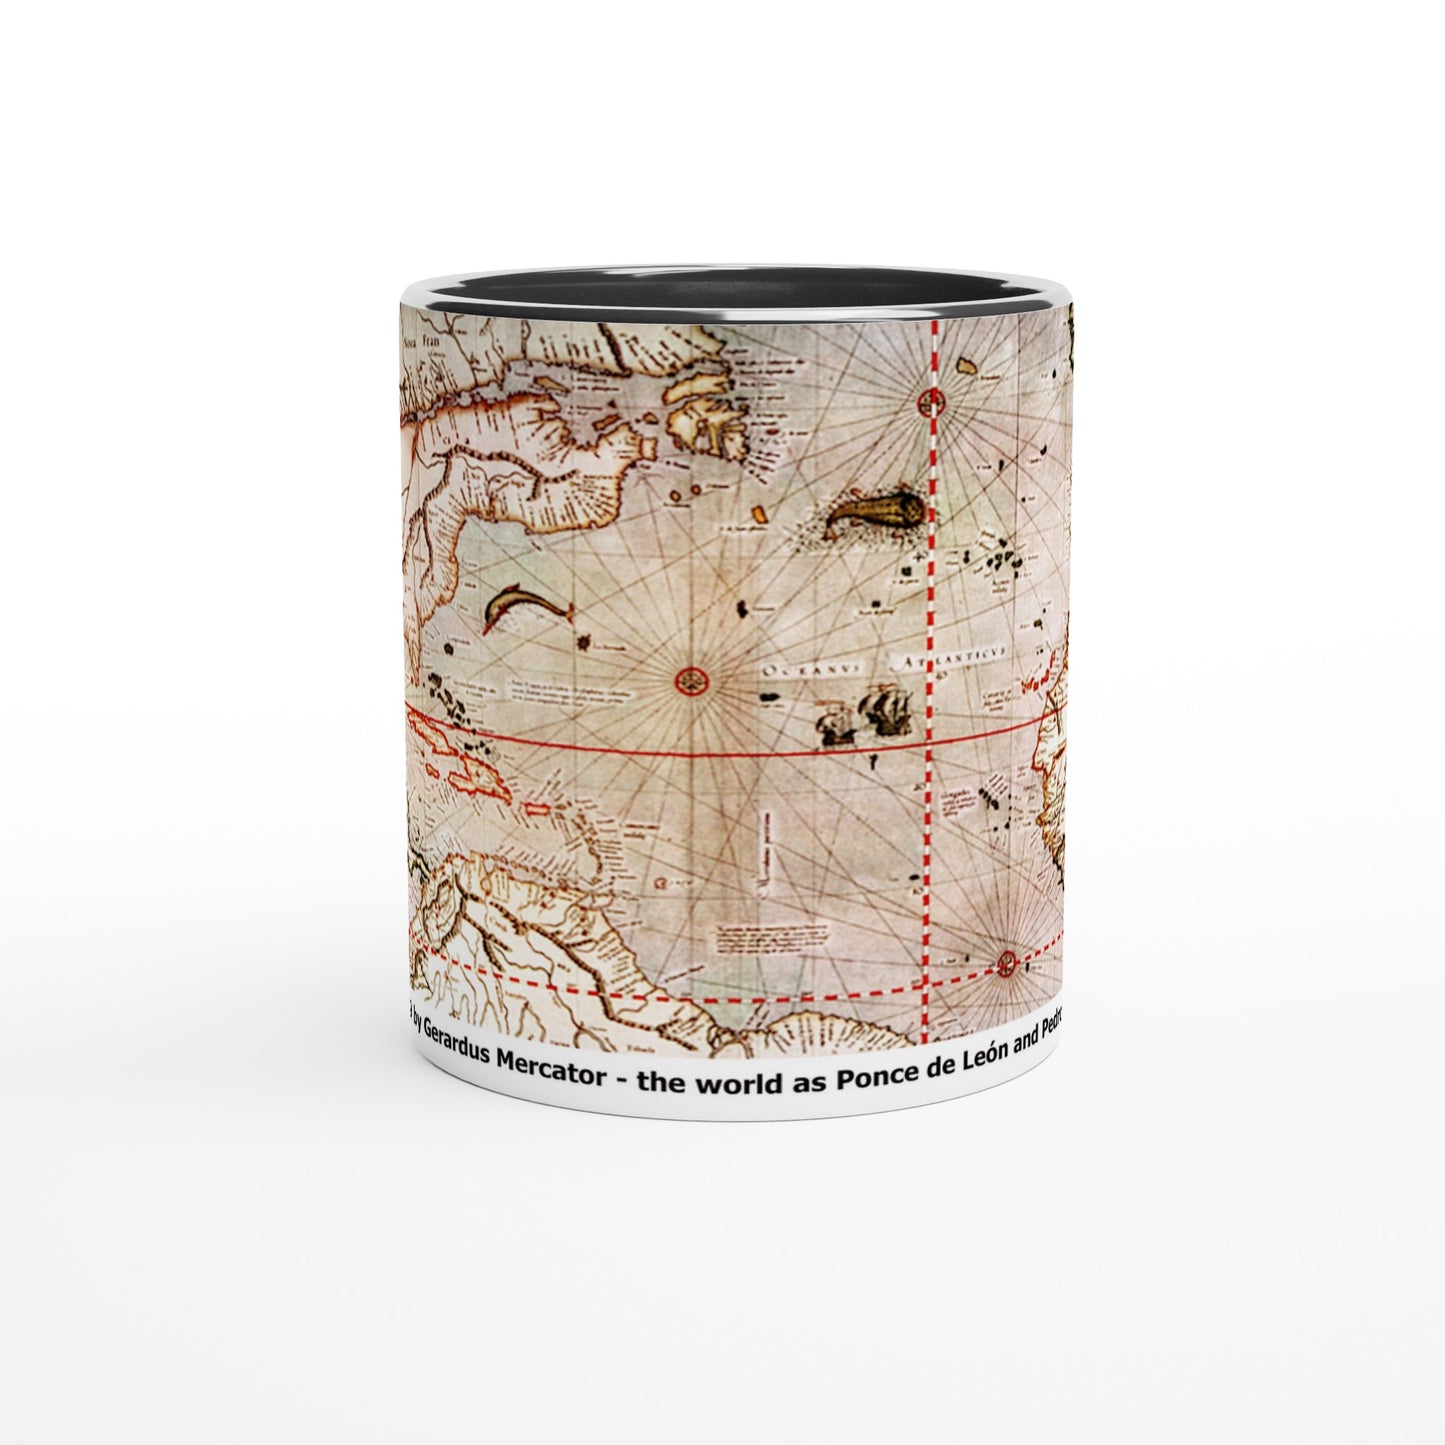 Coffee mug with world map using Mercator projection.